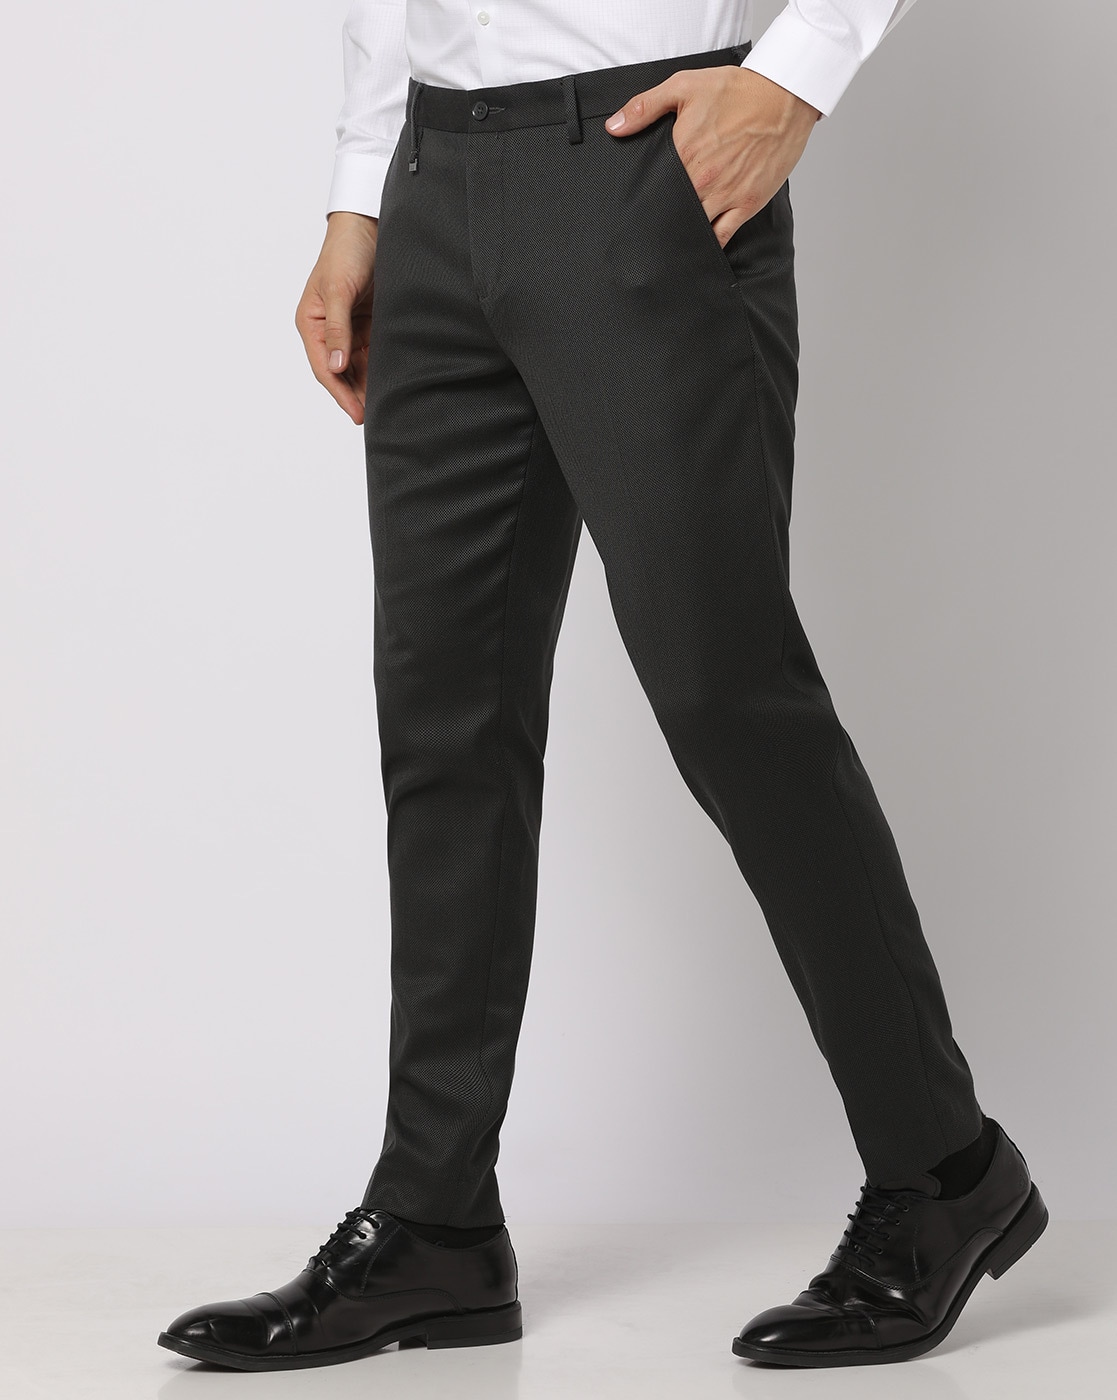 Buy Black Jeans for Men by Wrangler Online | Ajio.com